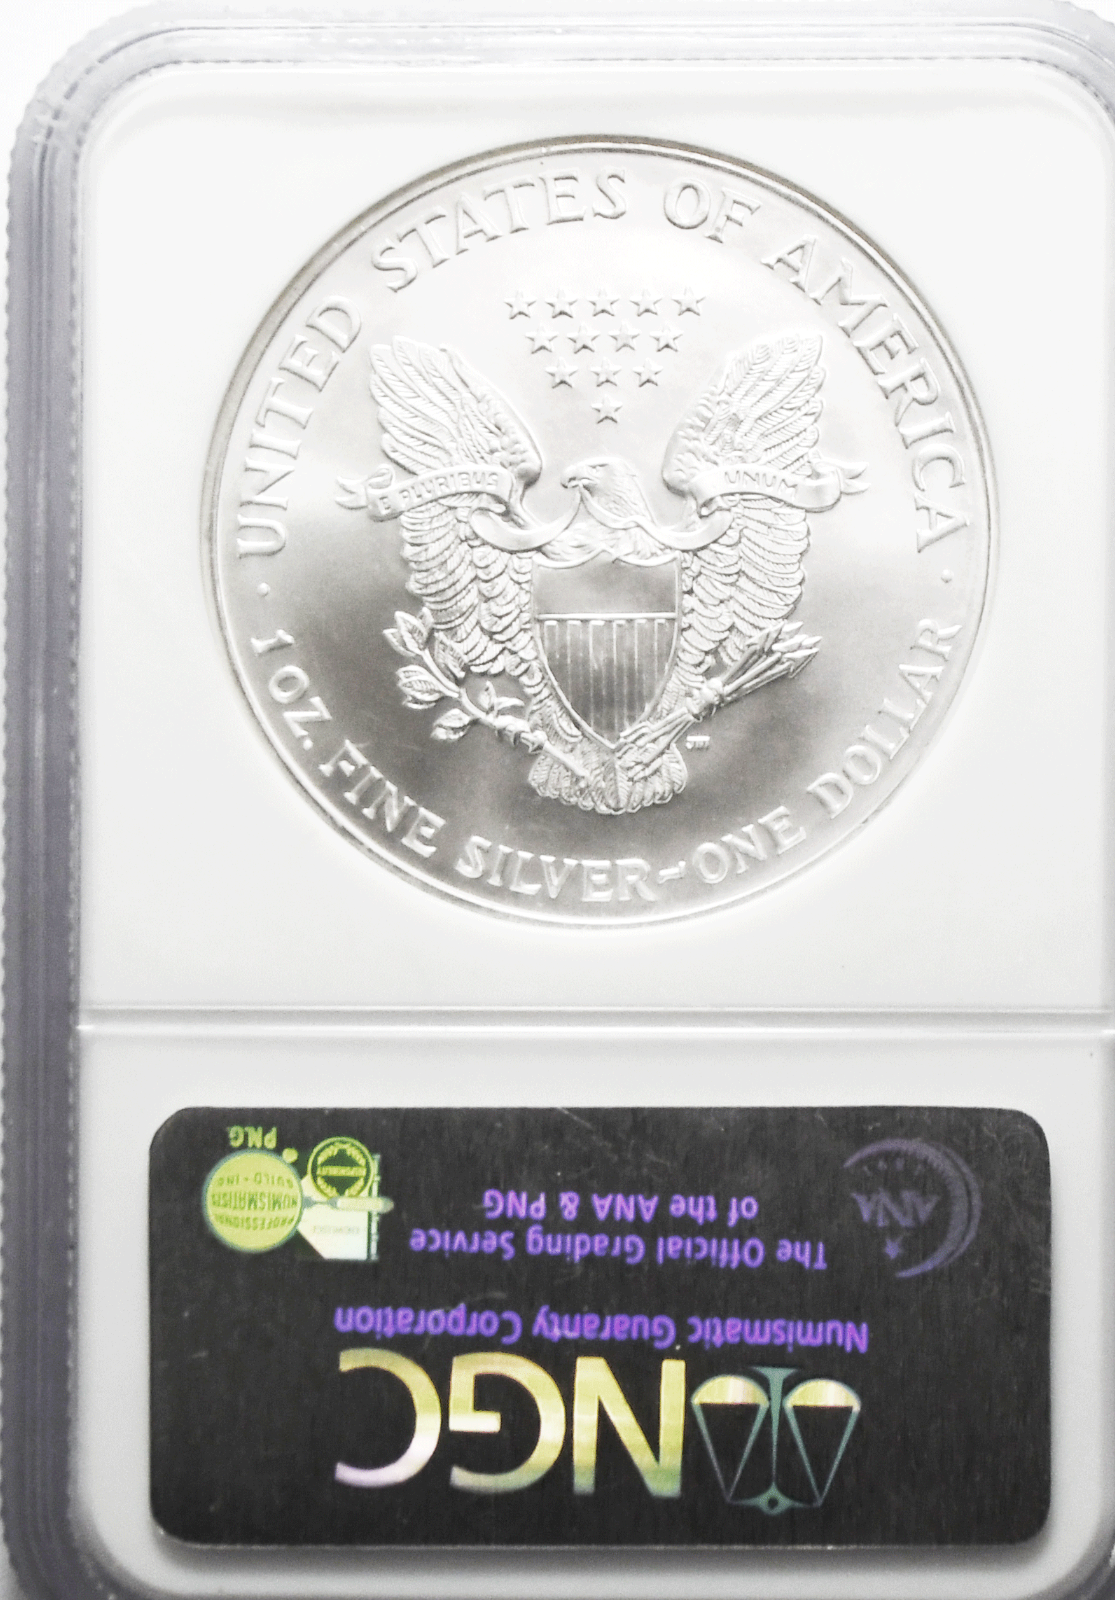 2001 American Silver Eagle $1 NGC MS69 .999 Fine 1oz.